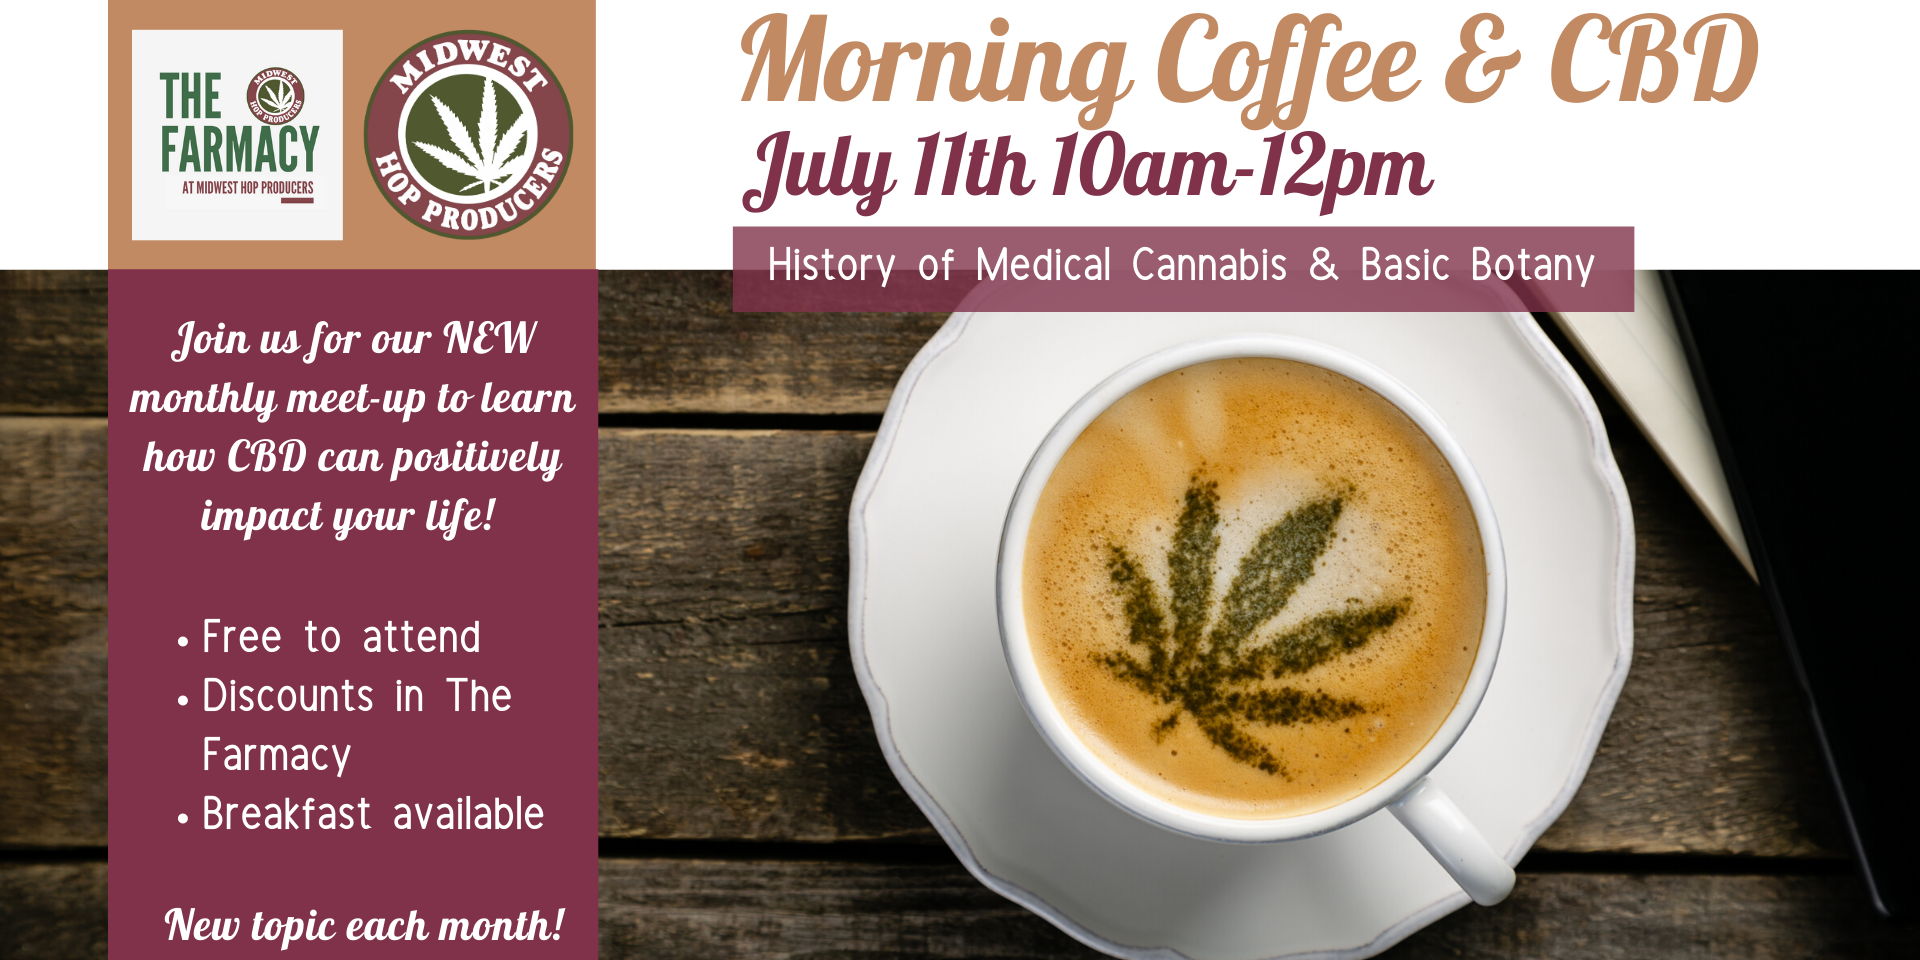 Morning Coffee & CBD promotional image